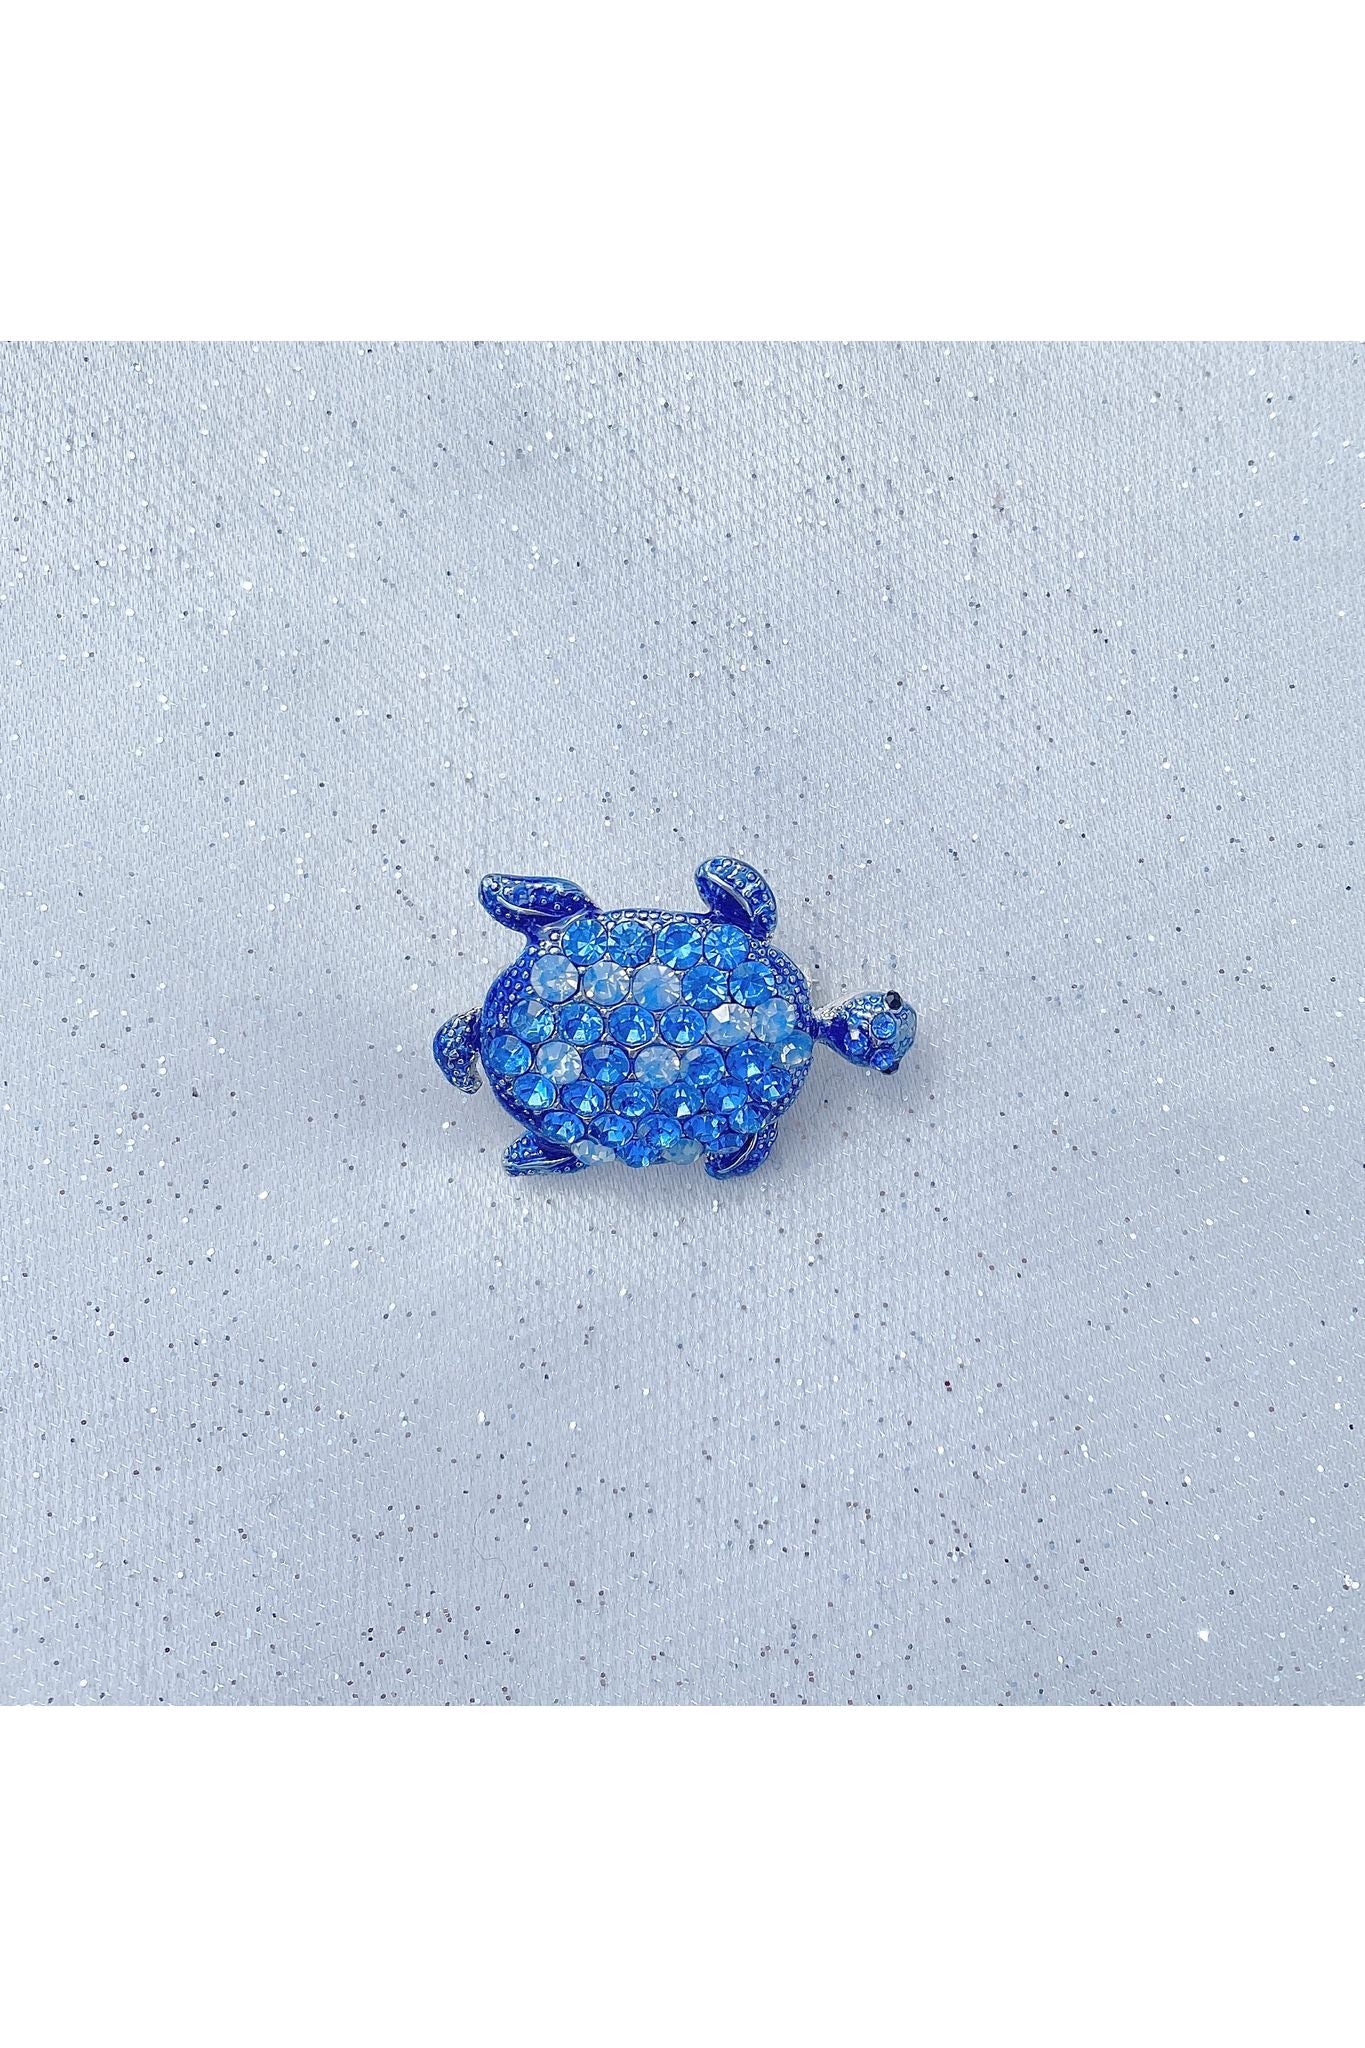 Turtle Brooch Blue Brooch 5060801171977